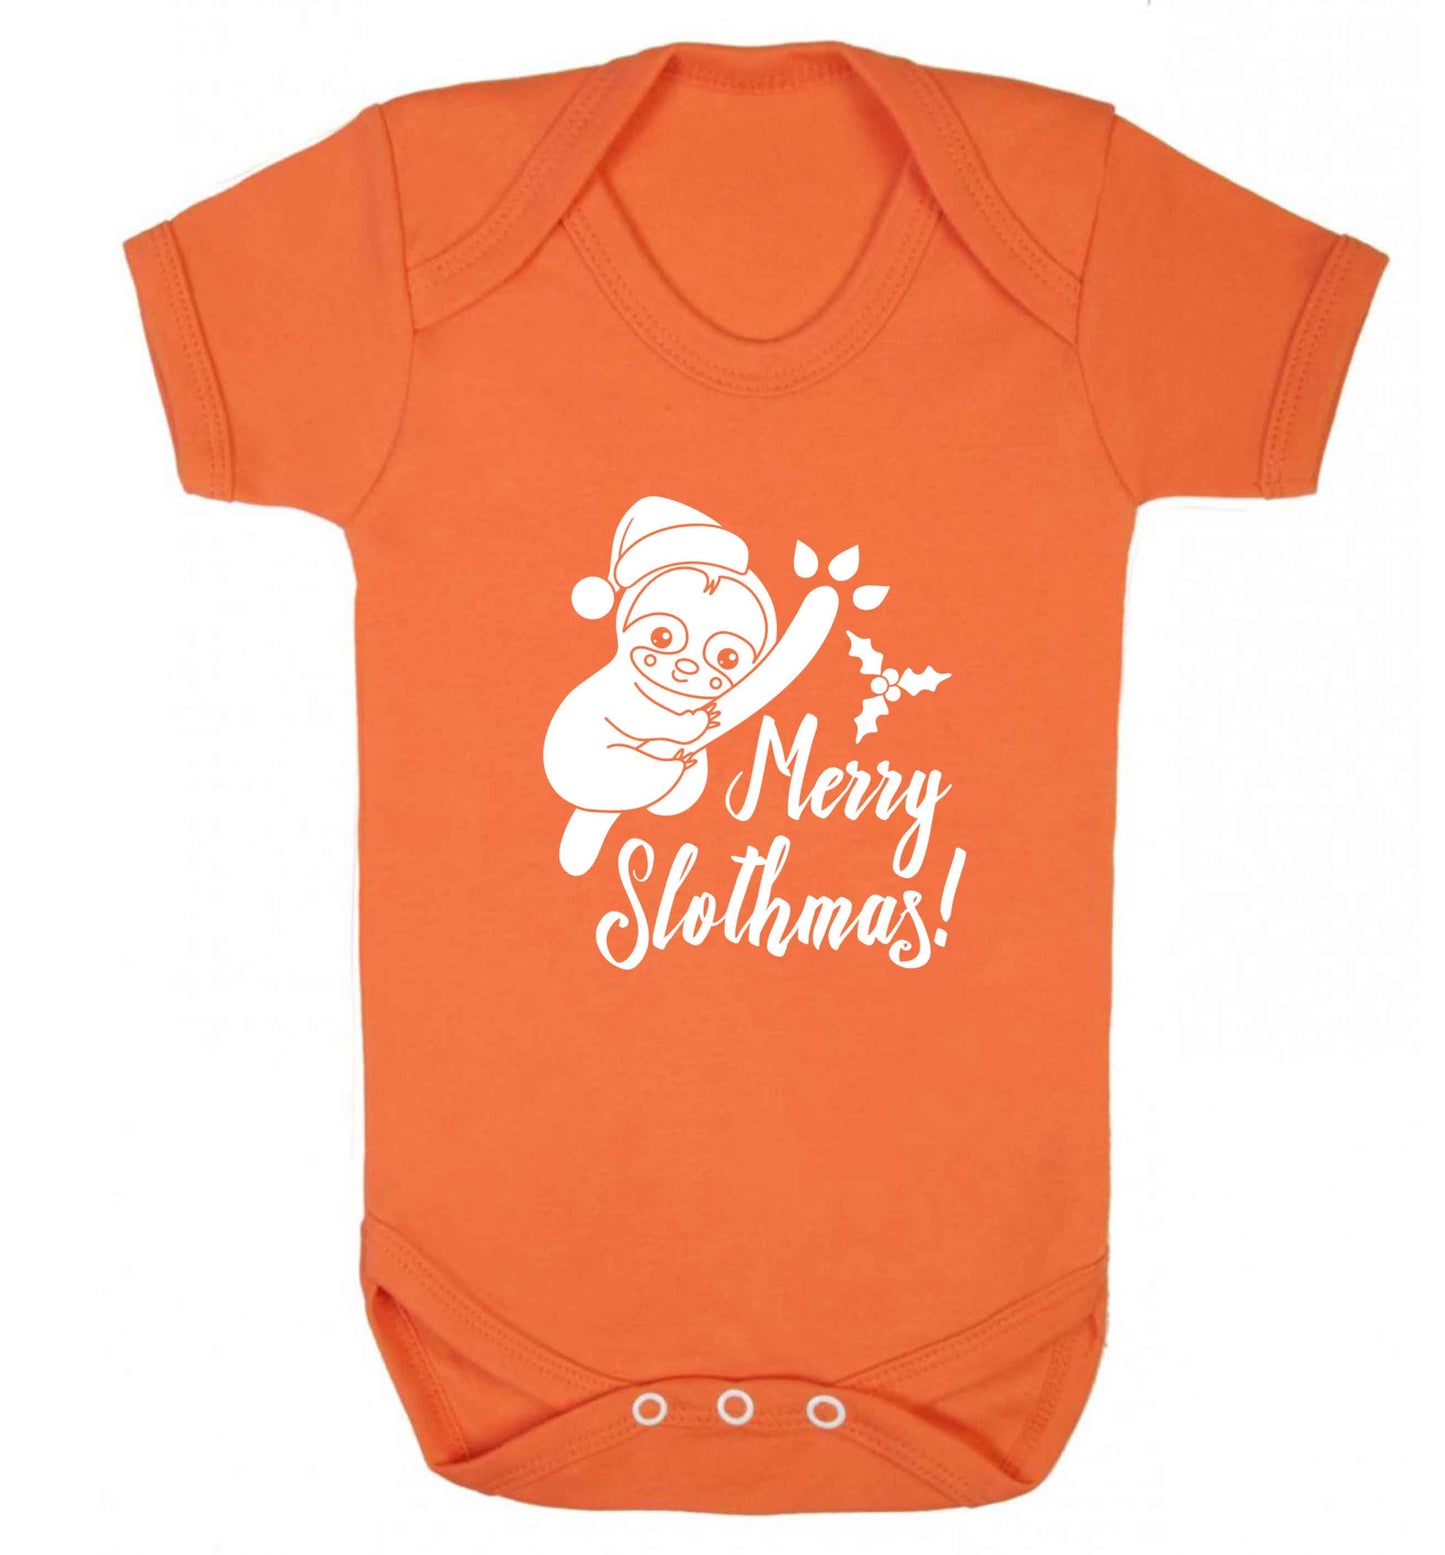 Merry Slothmas baby vest orange 18-24 months